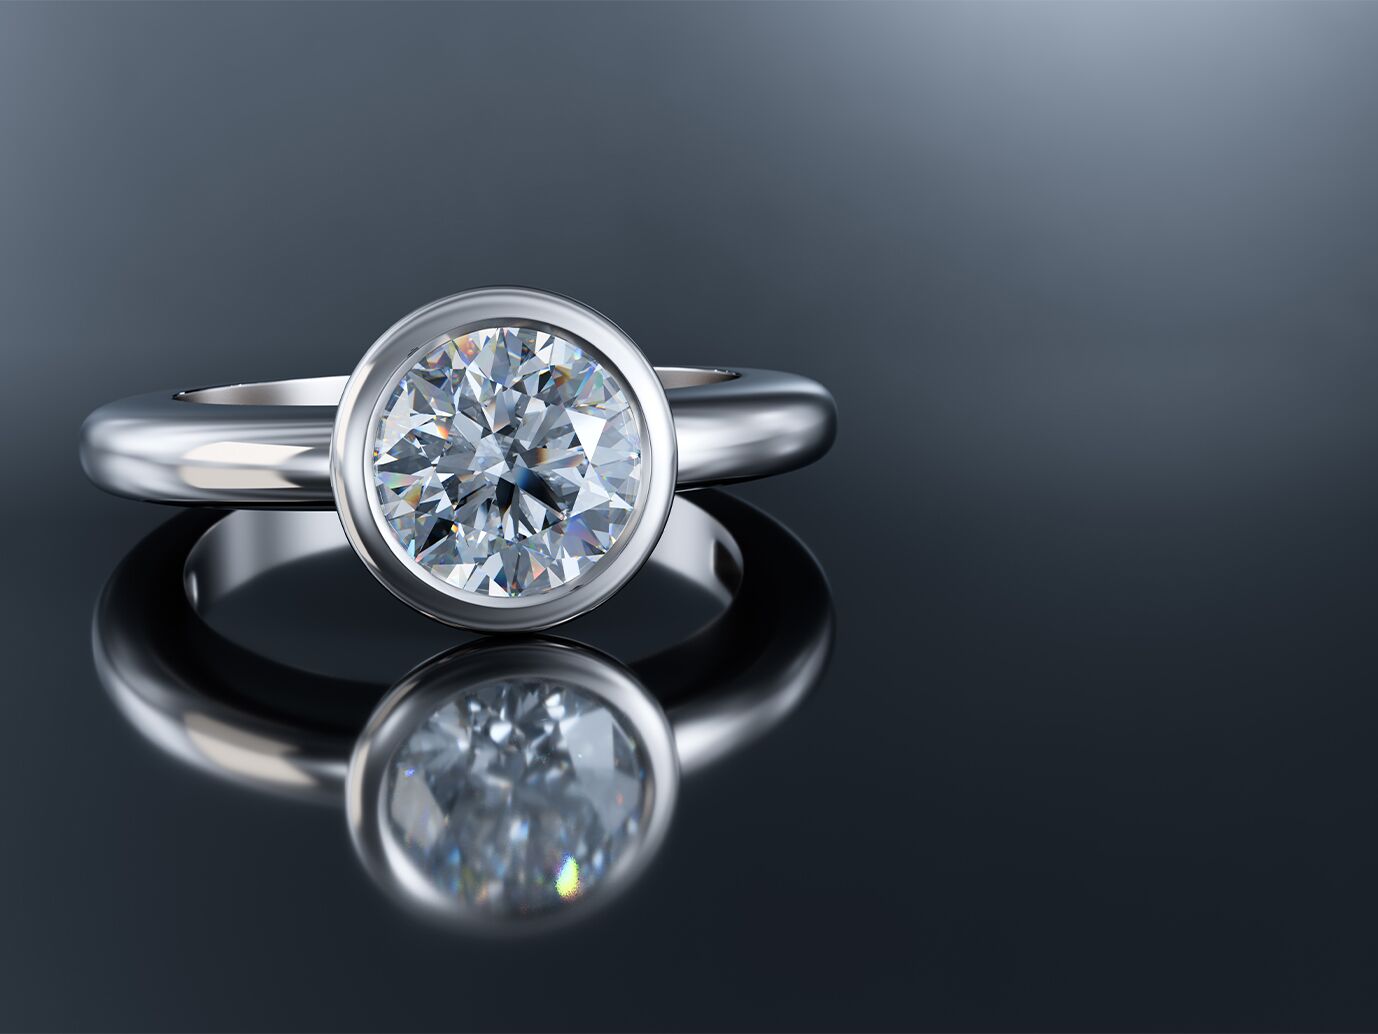 Bezel-set engagement ring